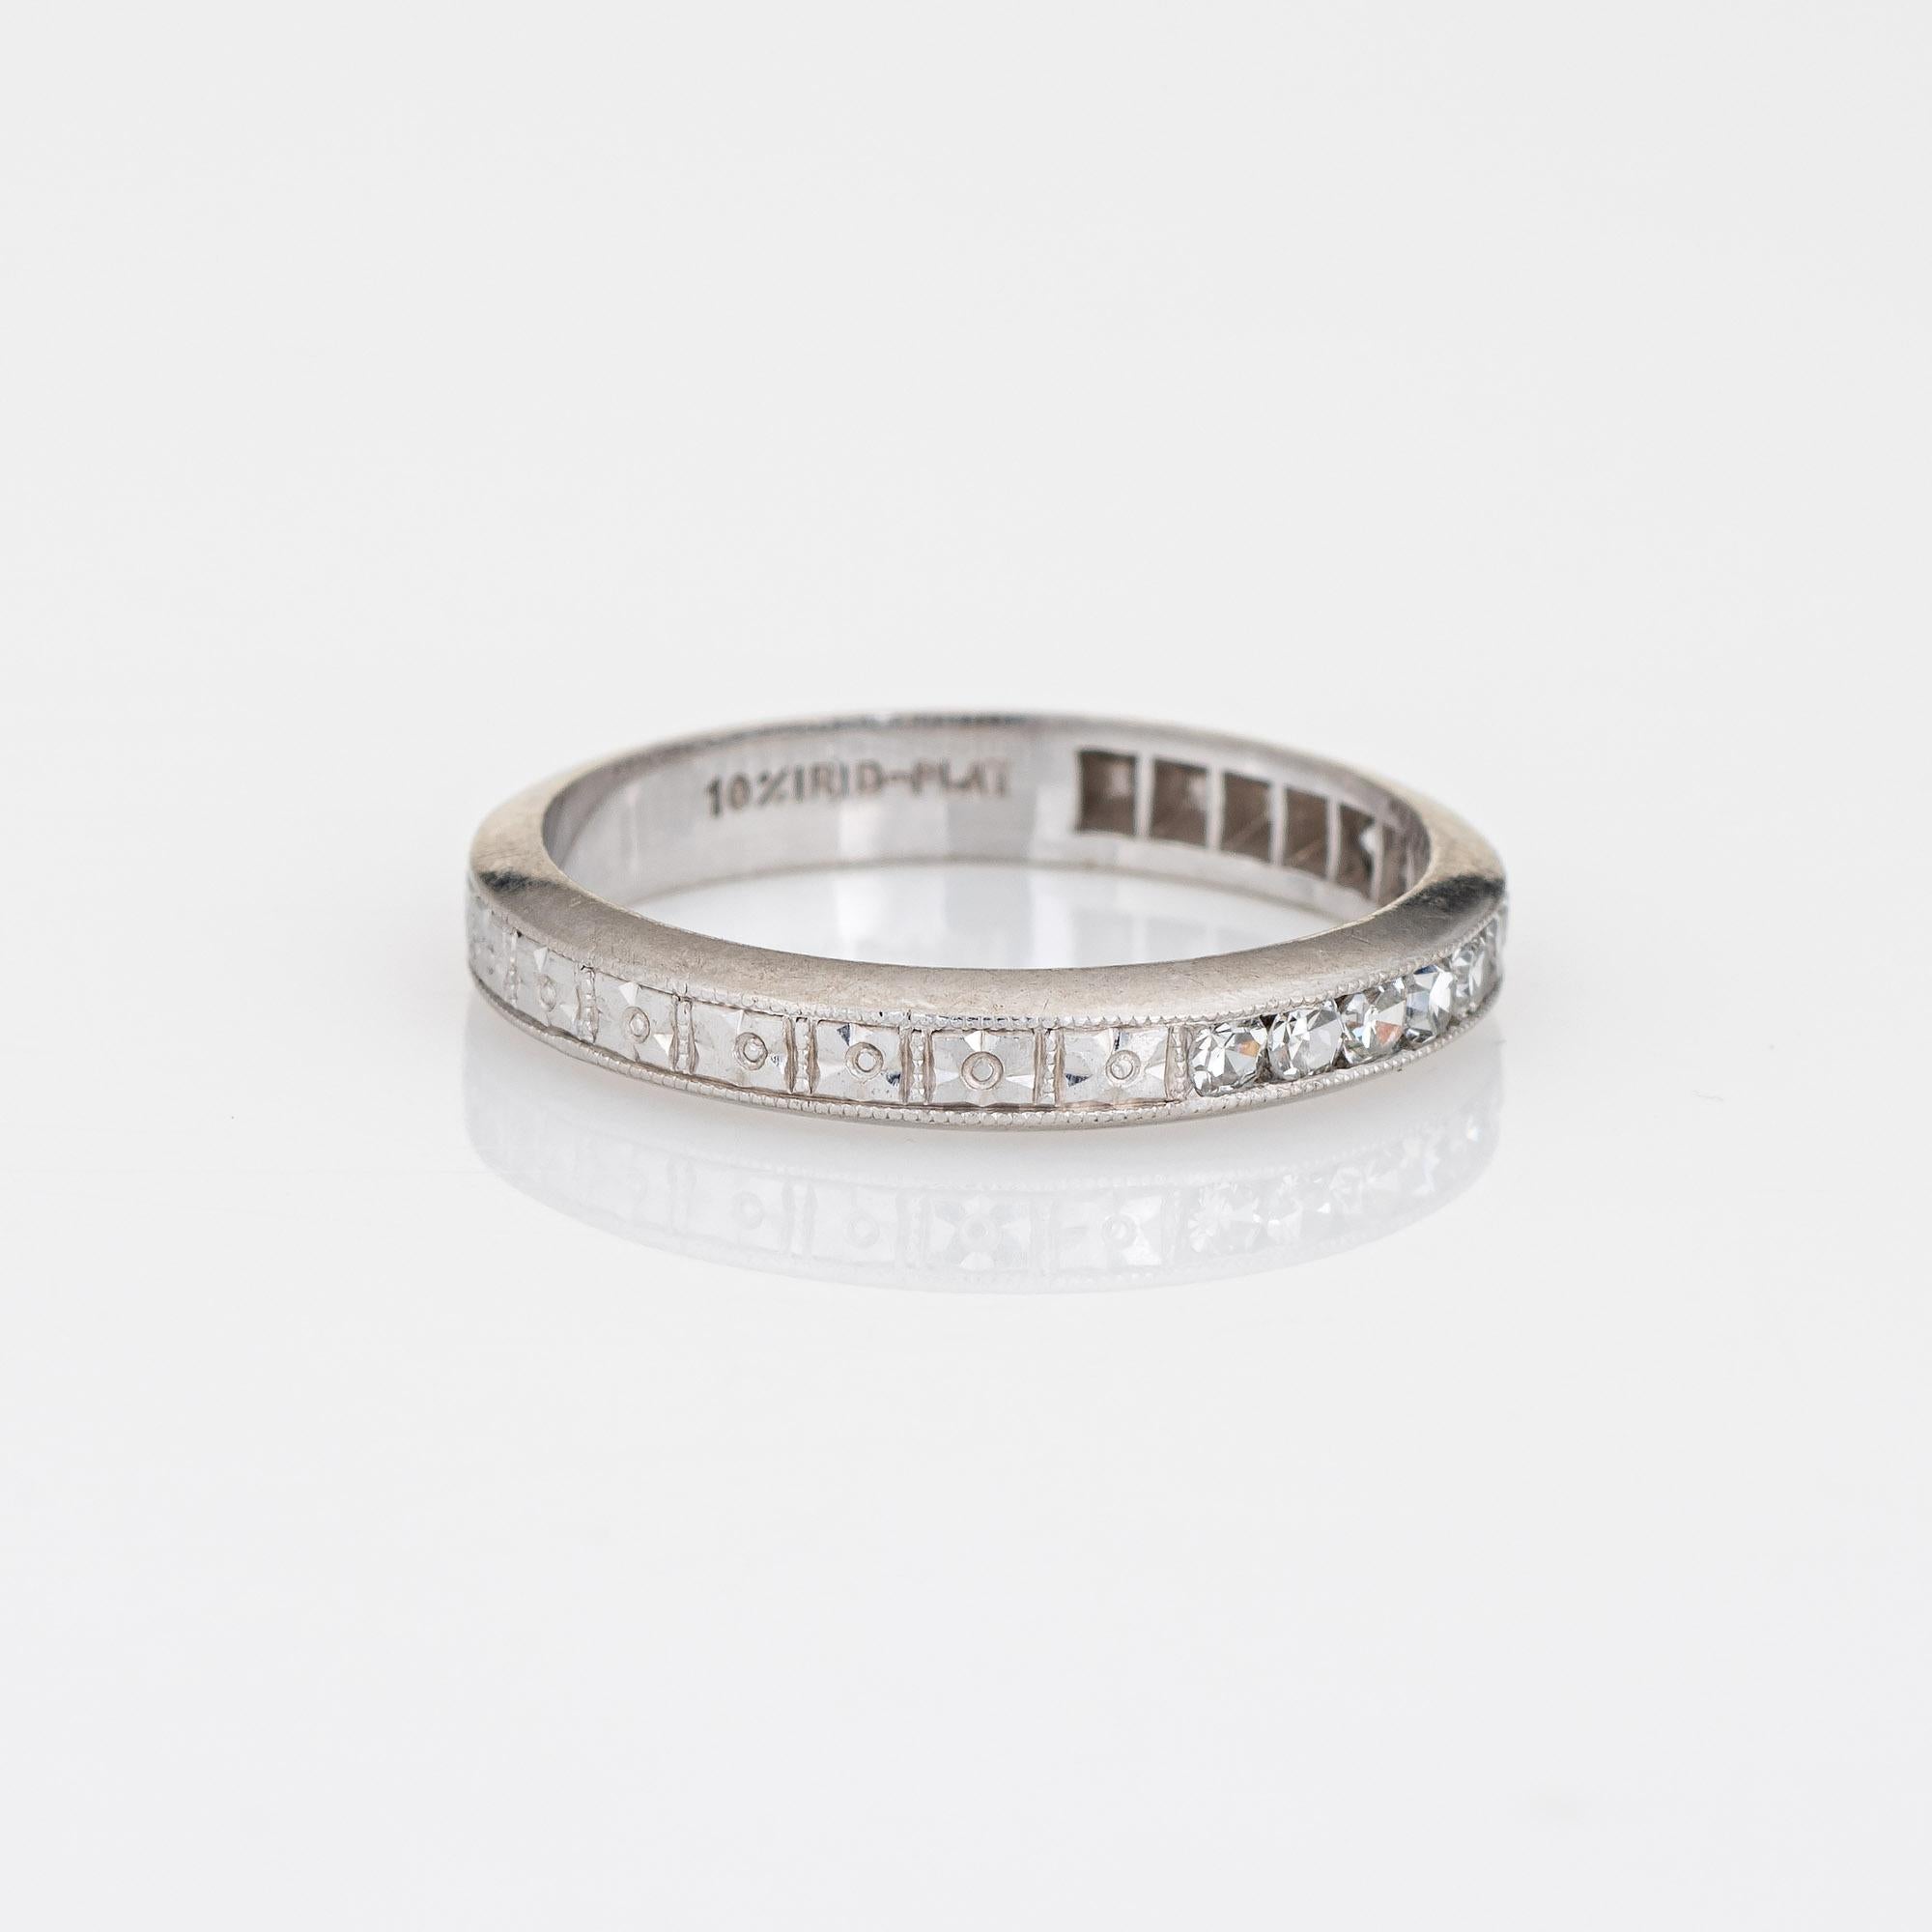 Round Cut Vintage Art Deco Diamond Ring Sz 5 Platinum Wedding Band Half Hoop Jewelry For Sale